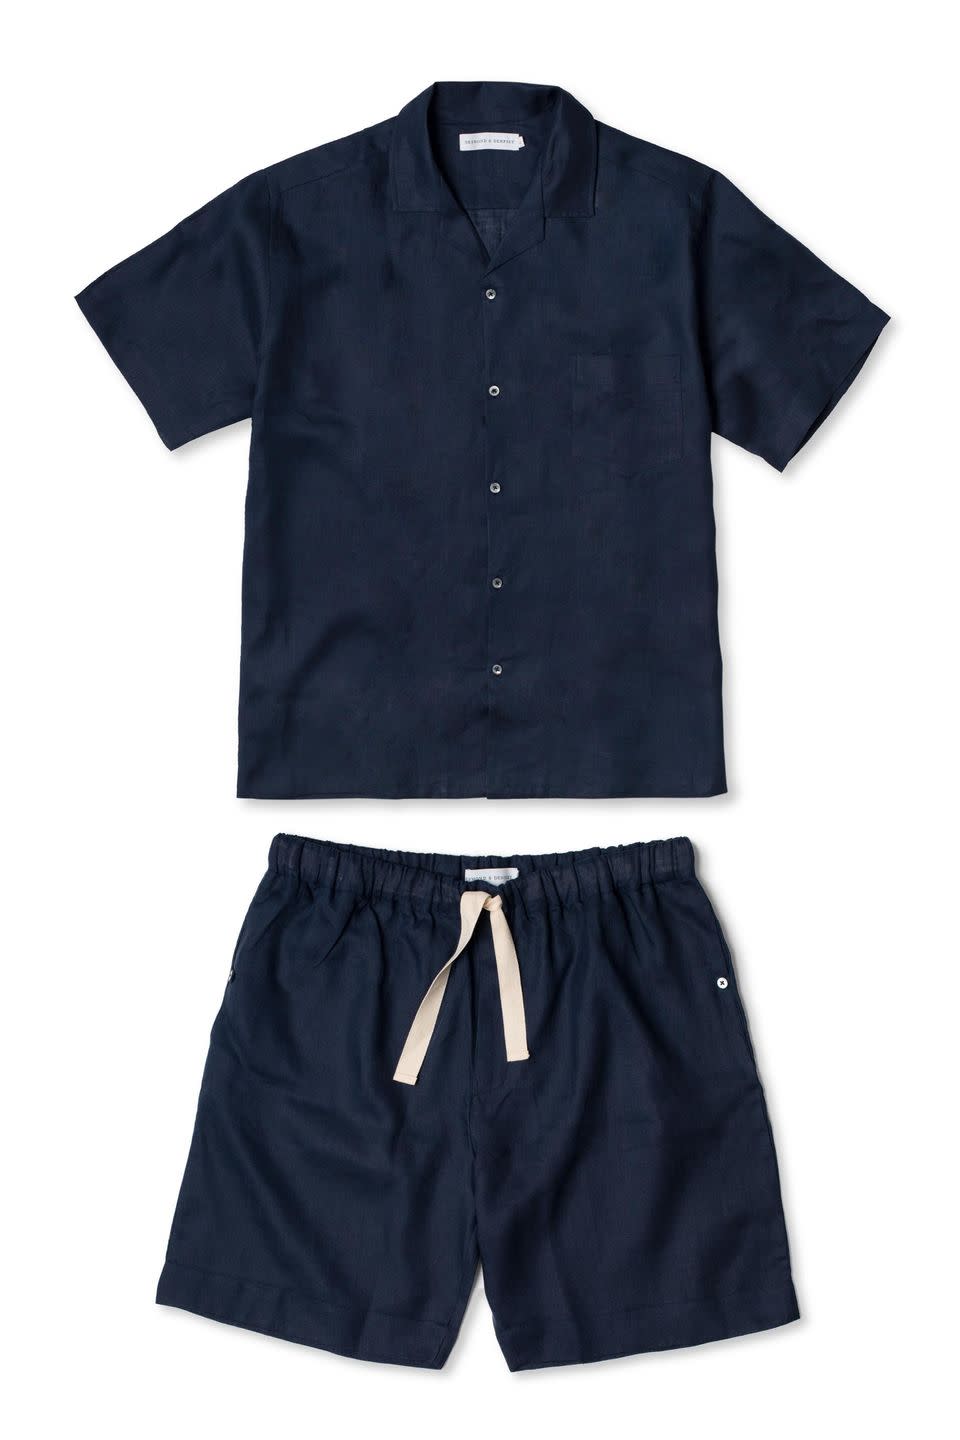 1) Navy linen pyjama set, Desmond and Dempsey